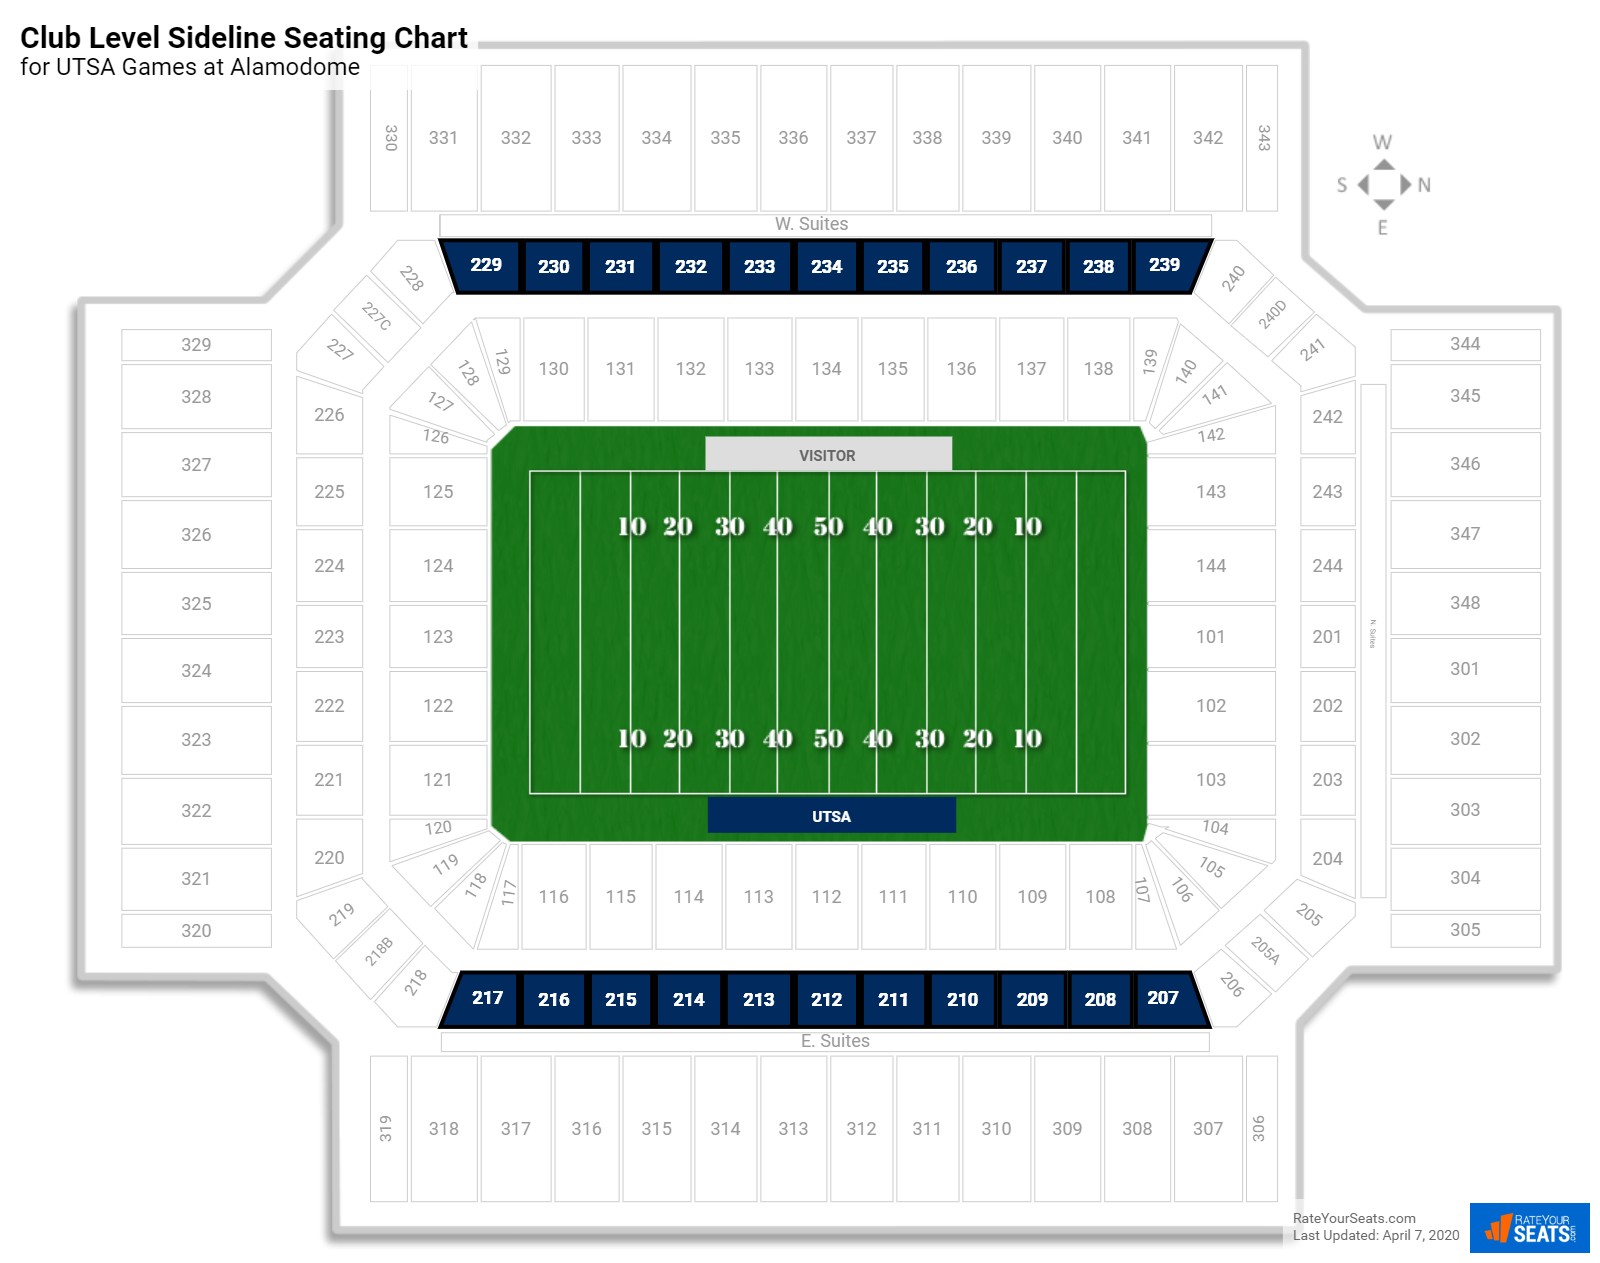 Club Level Sideline - Alamodome Football Seating - RateYourSeats.com